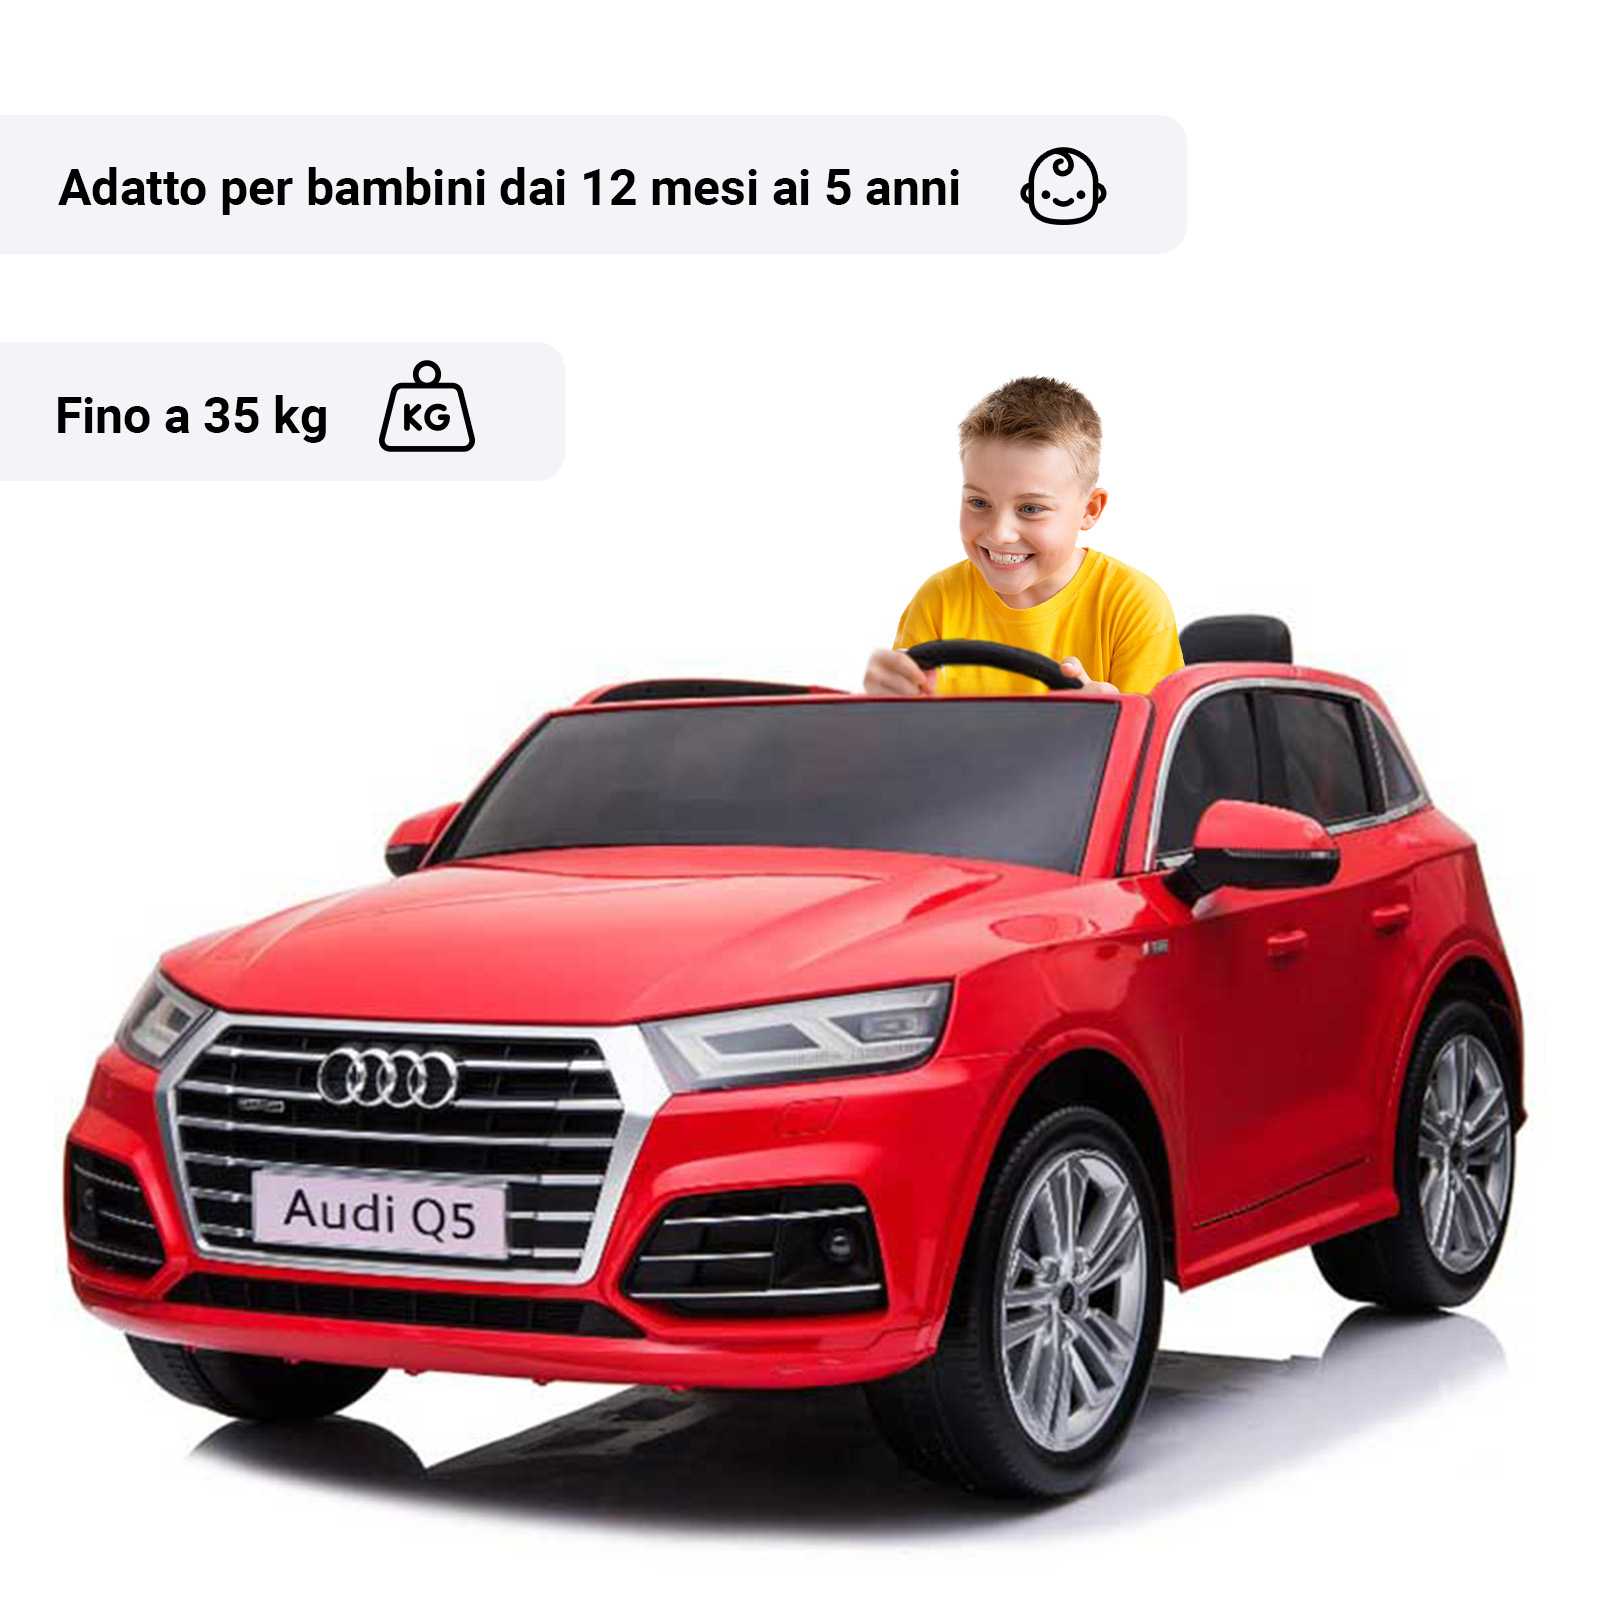 Audi Q5 con bambino